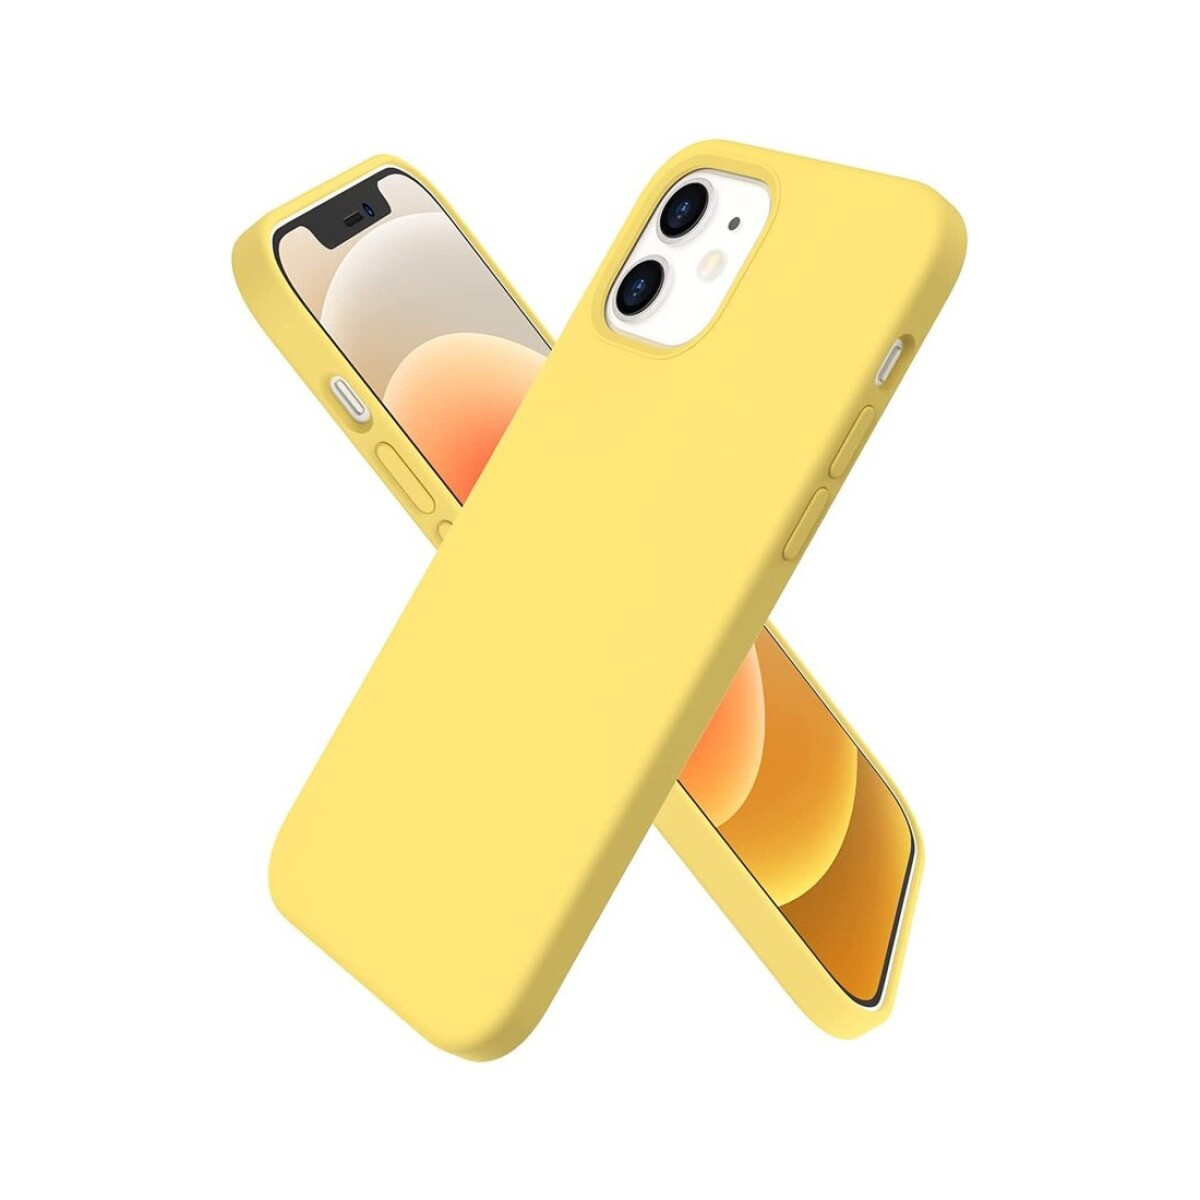 Protector de silicona para iphone 12 mini - Amarillo 